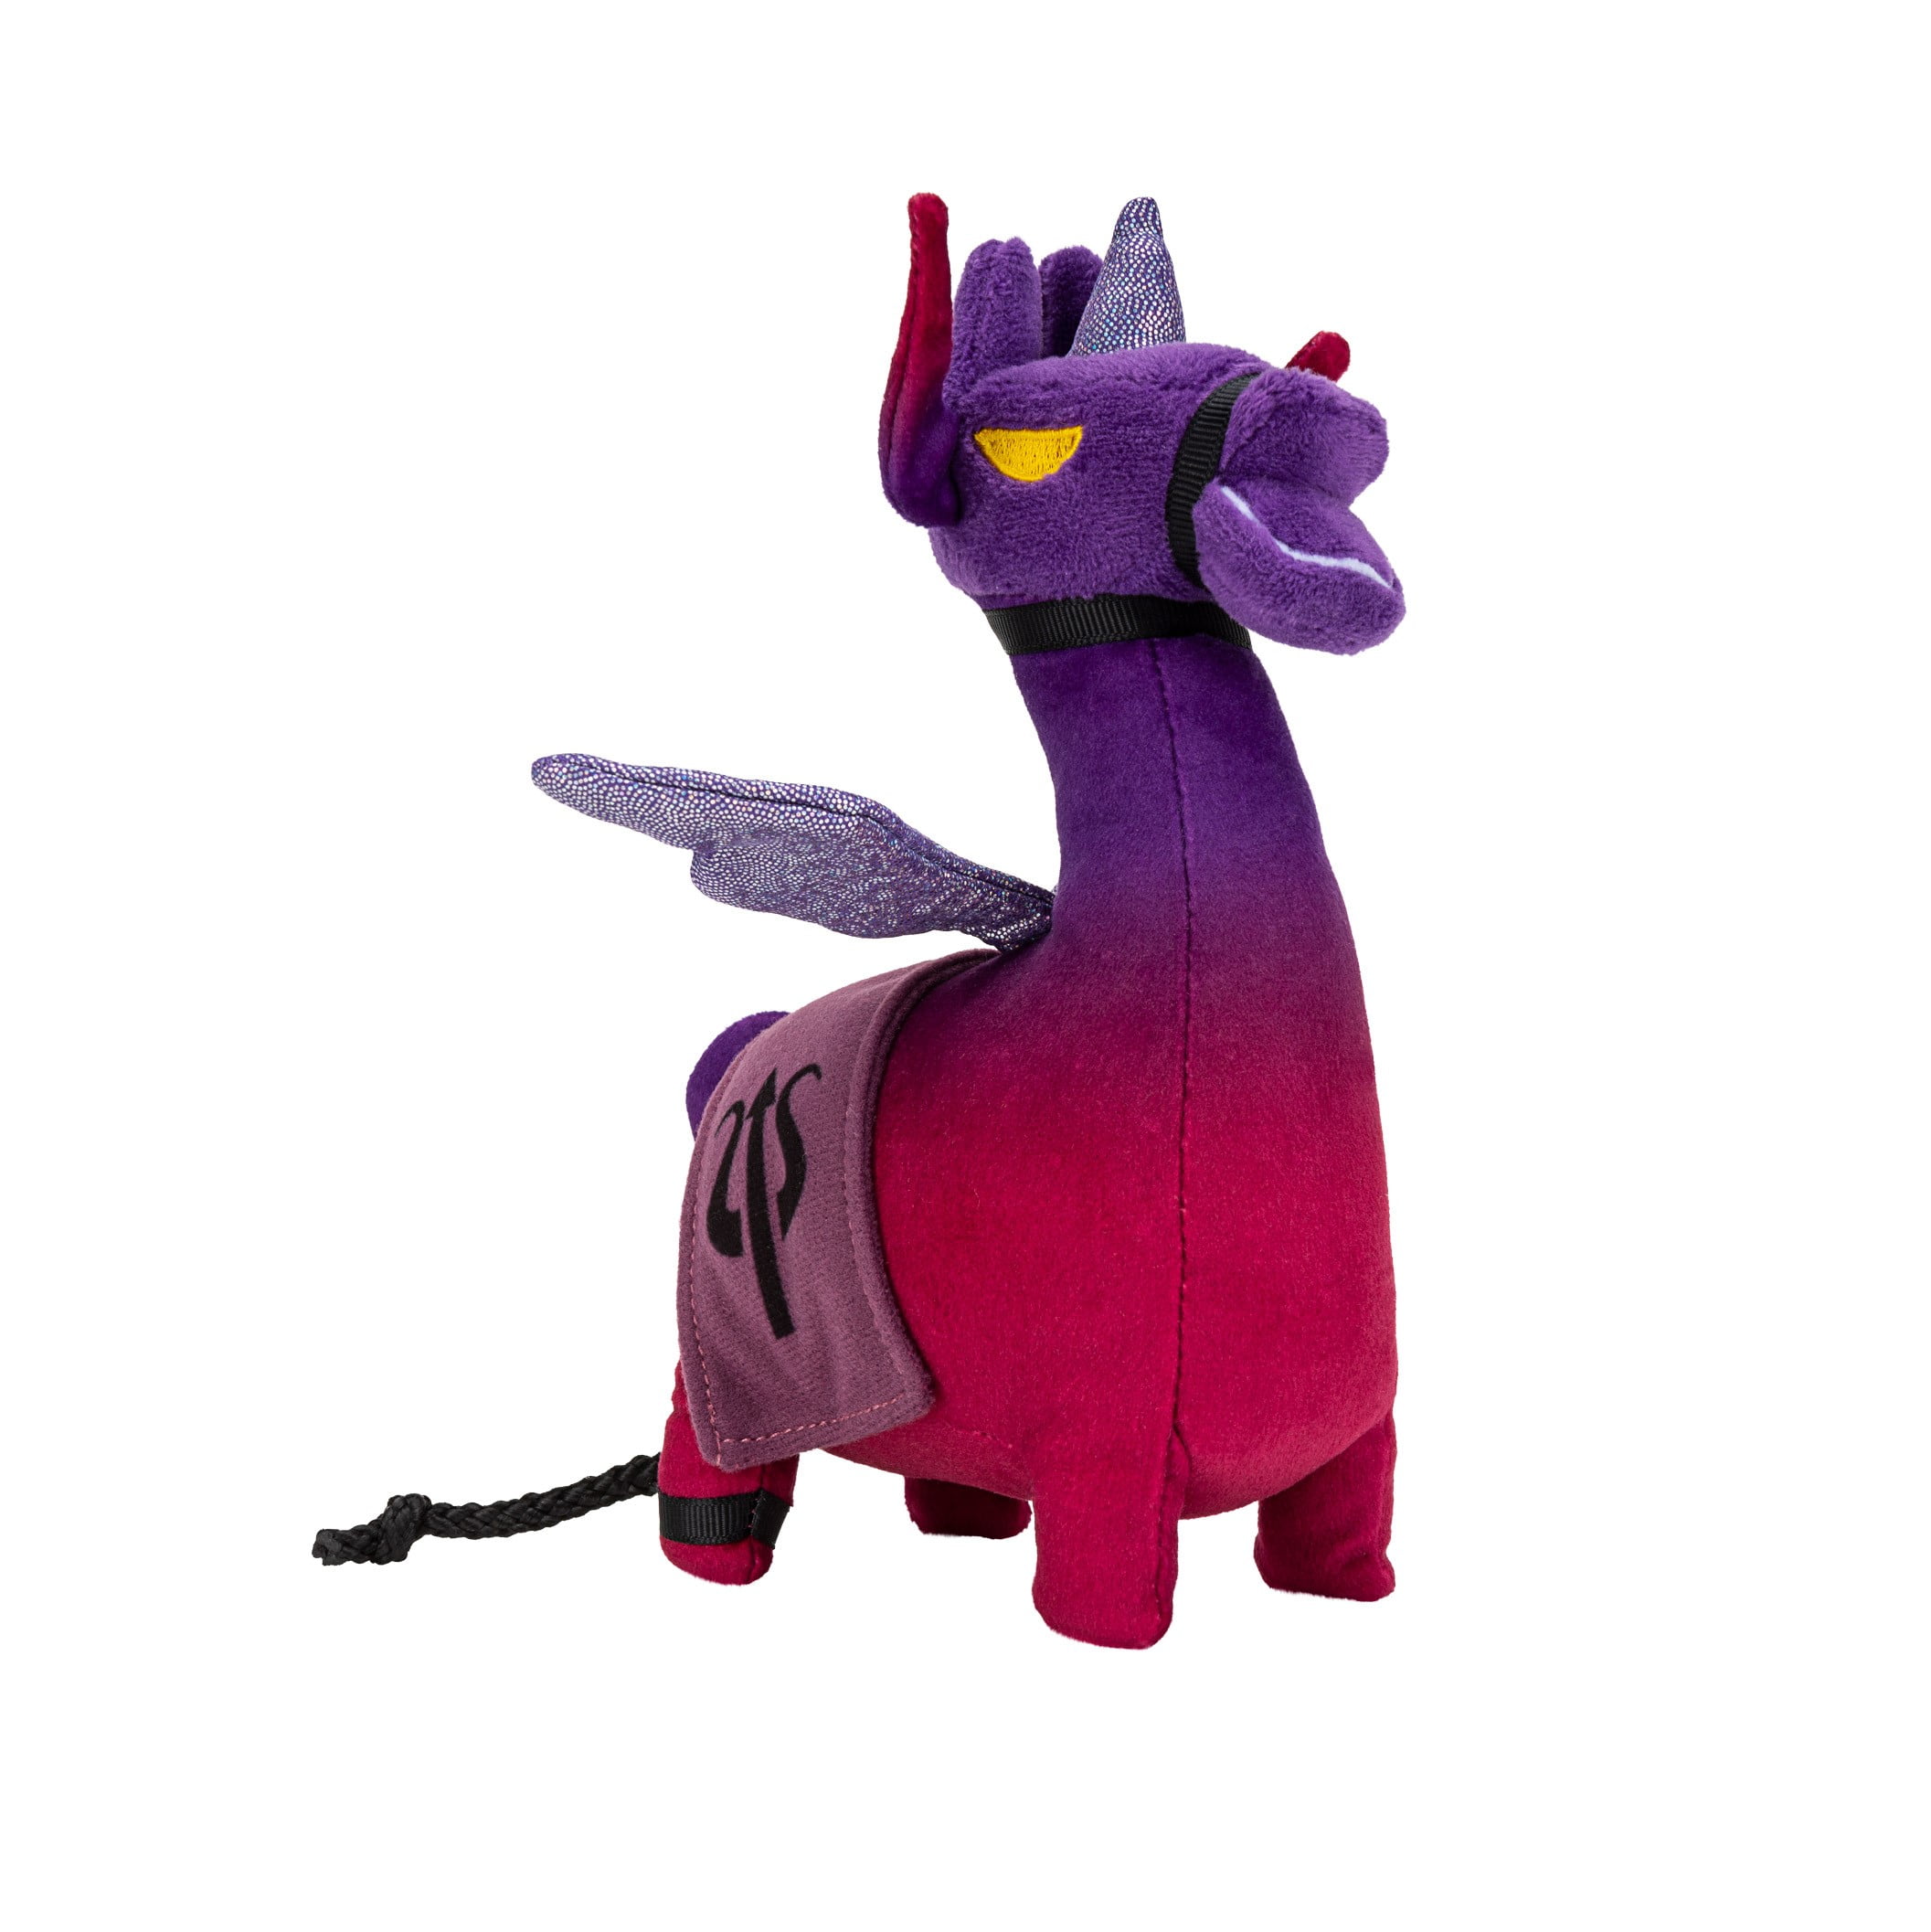 Fortnite Plushy Plush Stuffed Animal Loot Llama 2018 Epic Games RUSS Toys 